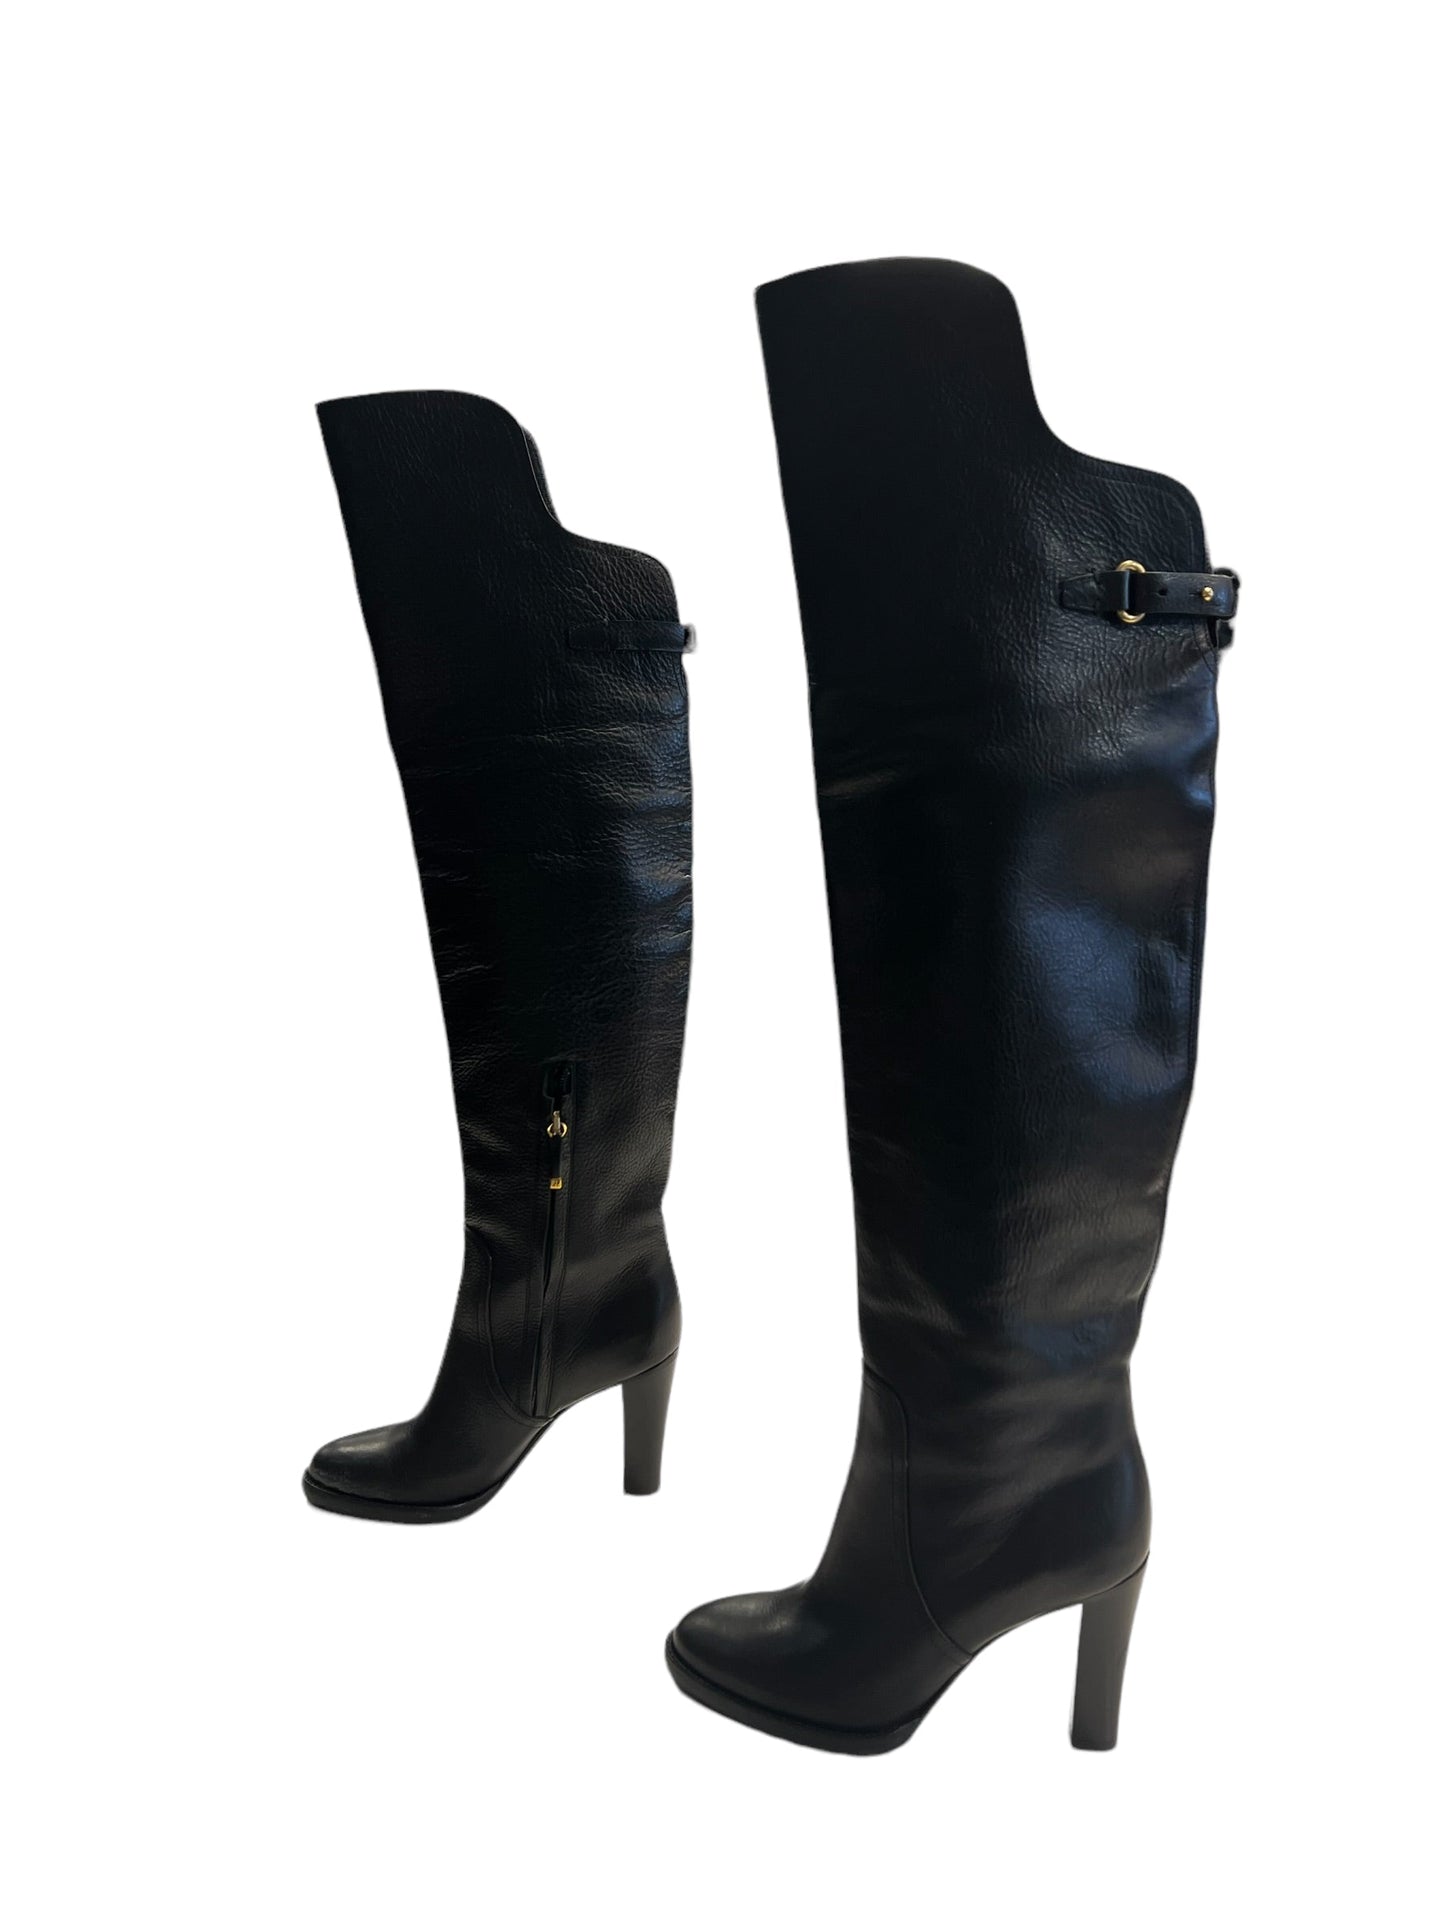 Boots Leather By Ralph Lauren Black Label  Size: 7